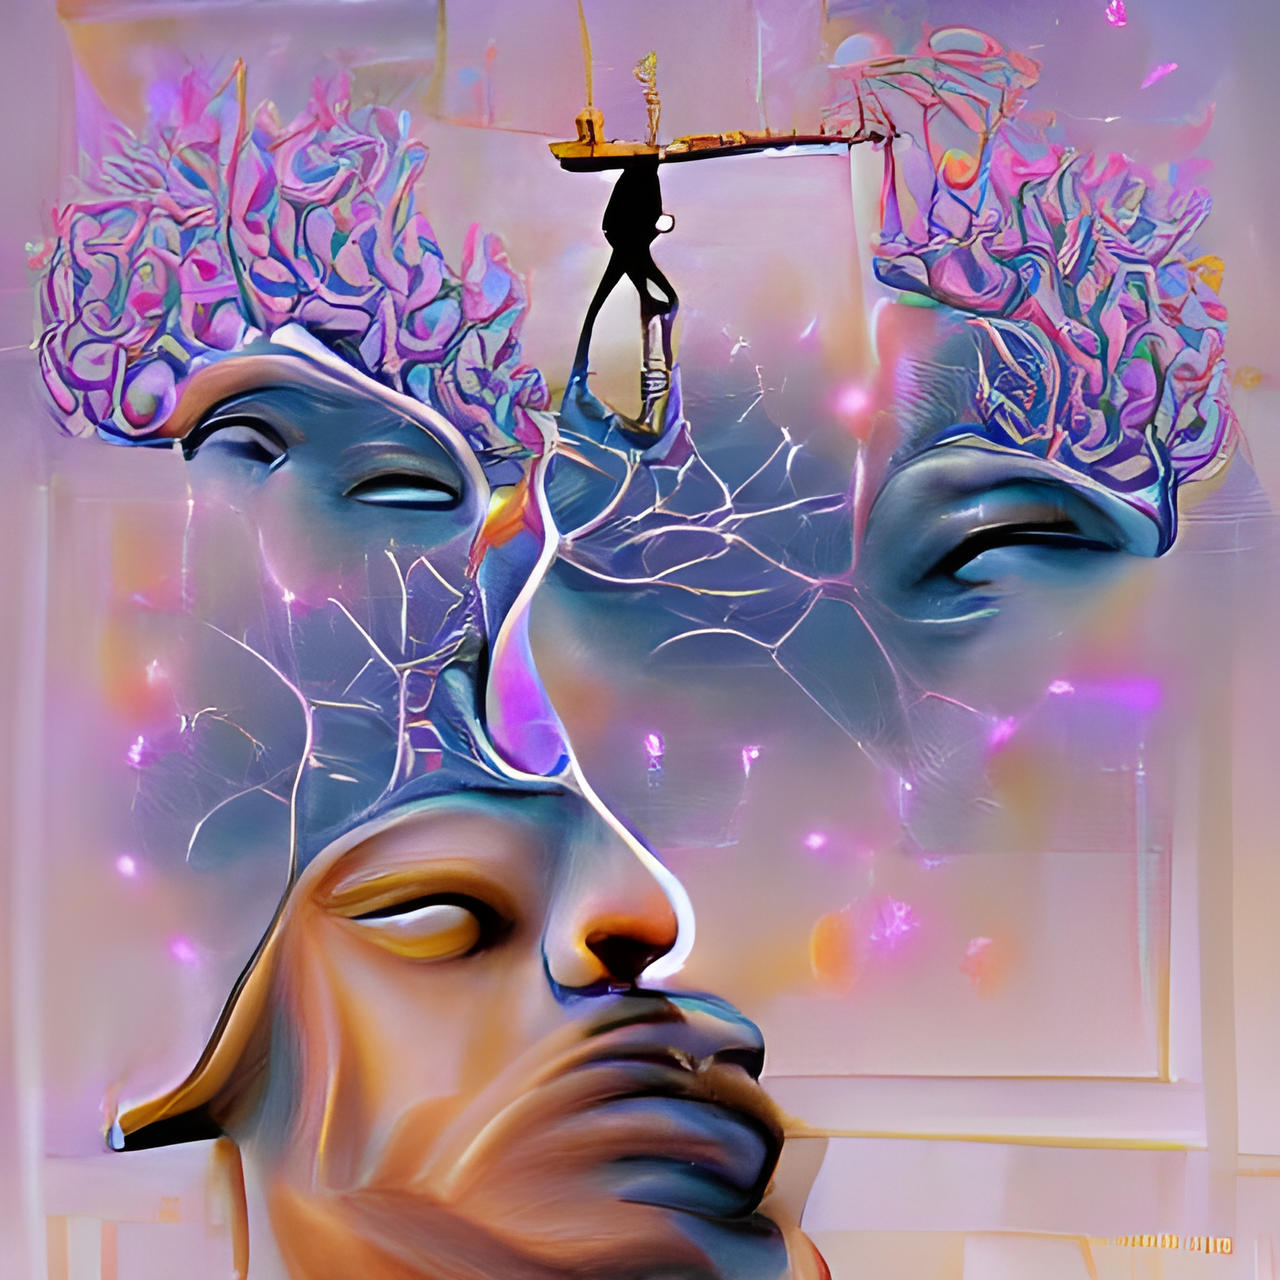 Mind Set Free - AI Generated Art by GeneratedAIArt on DeviantArt